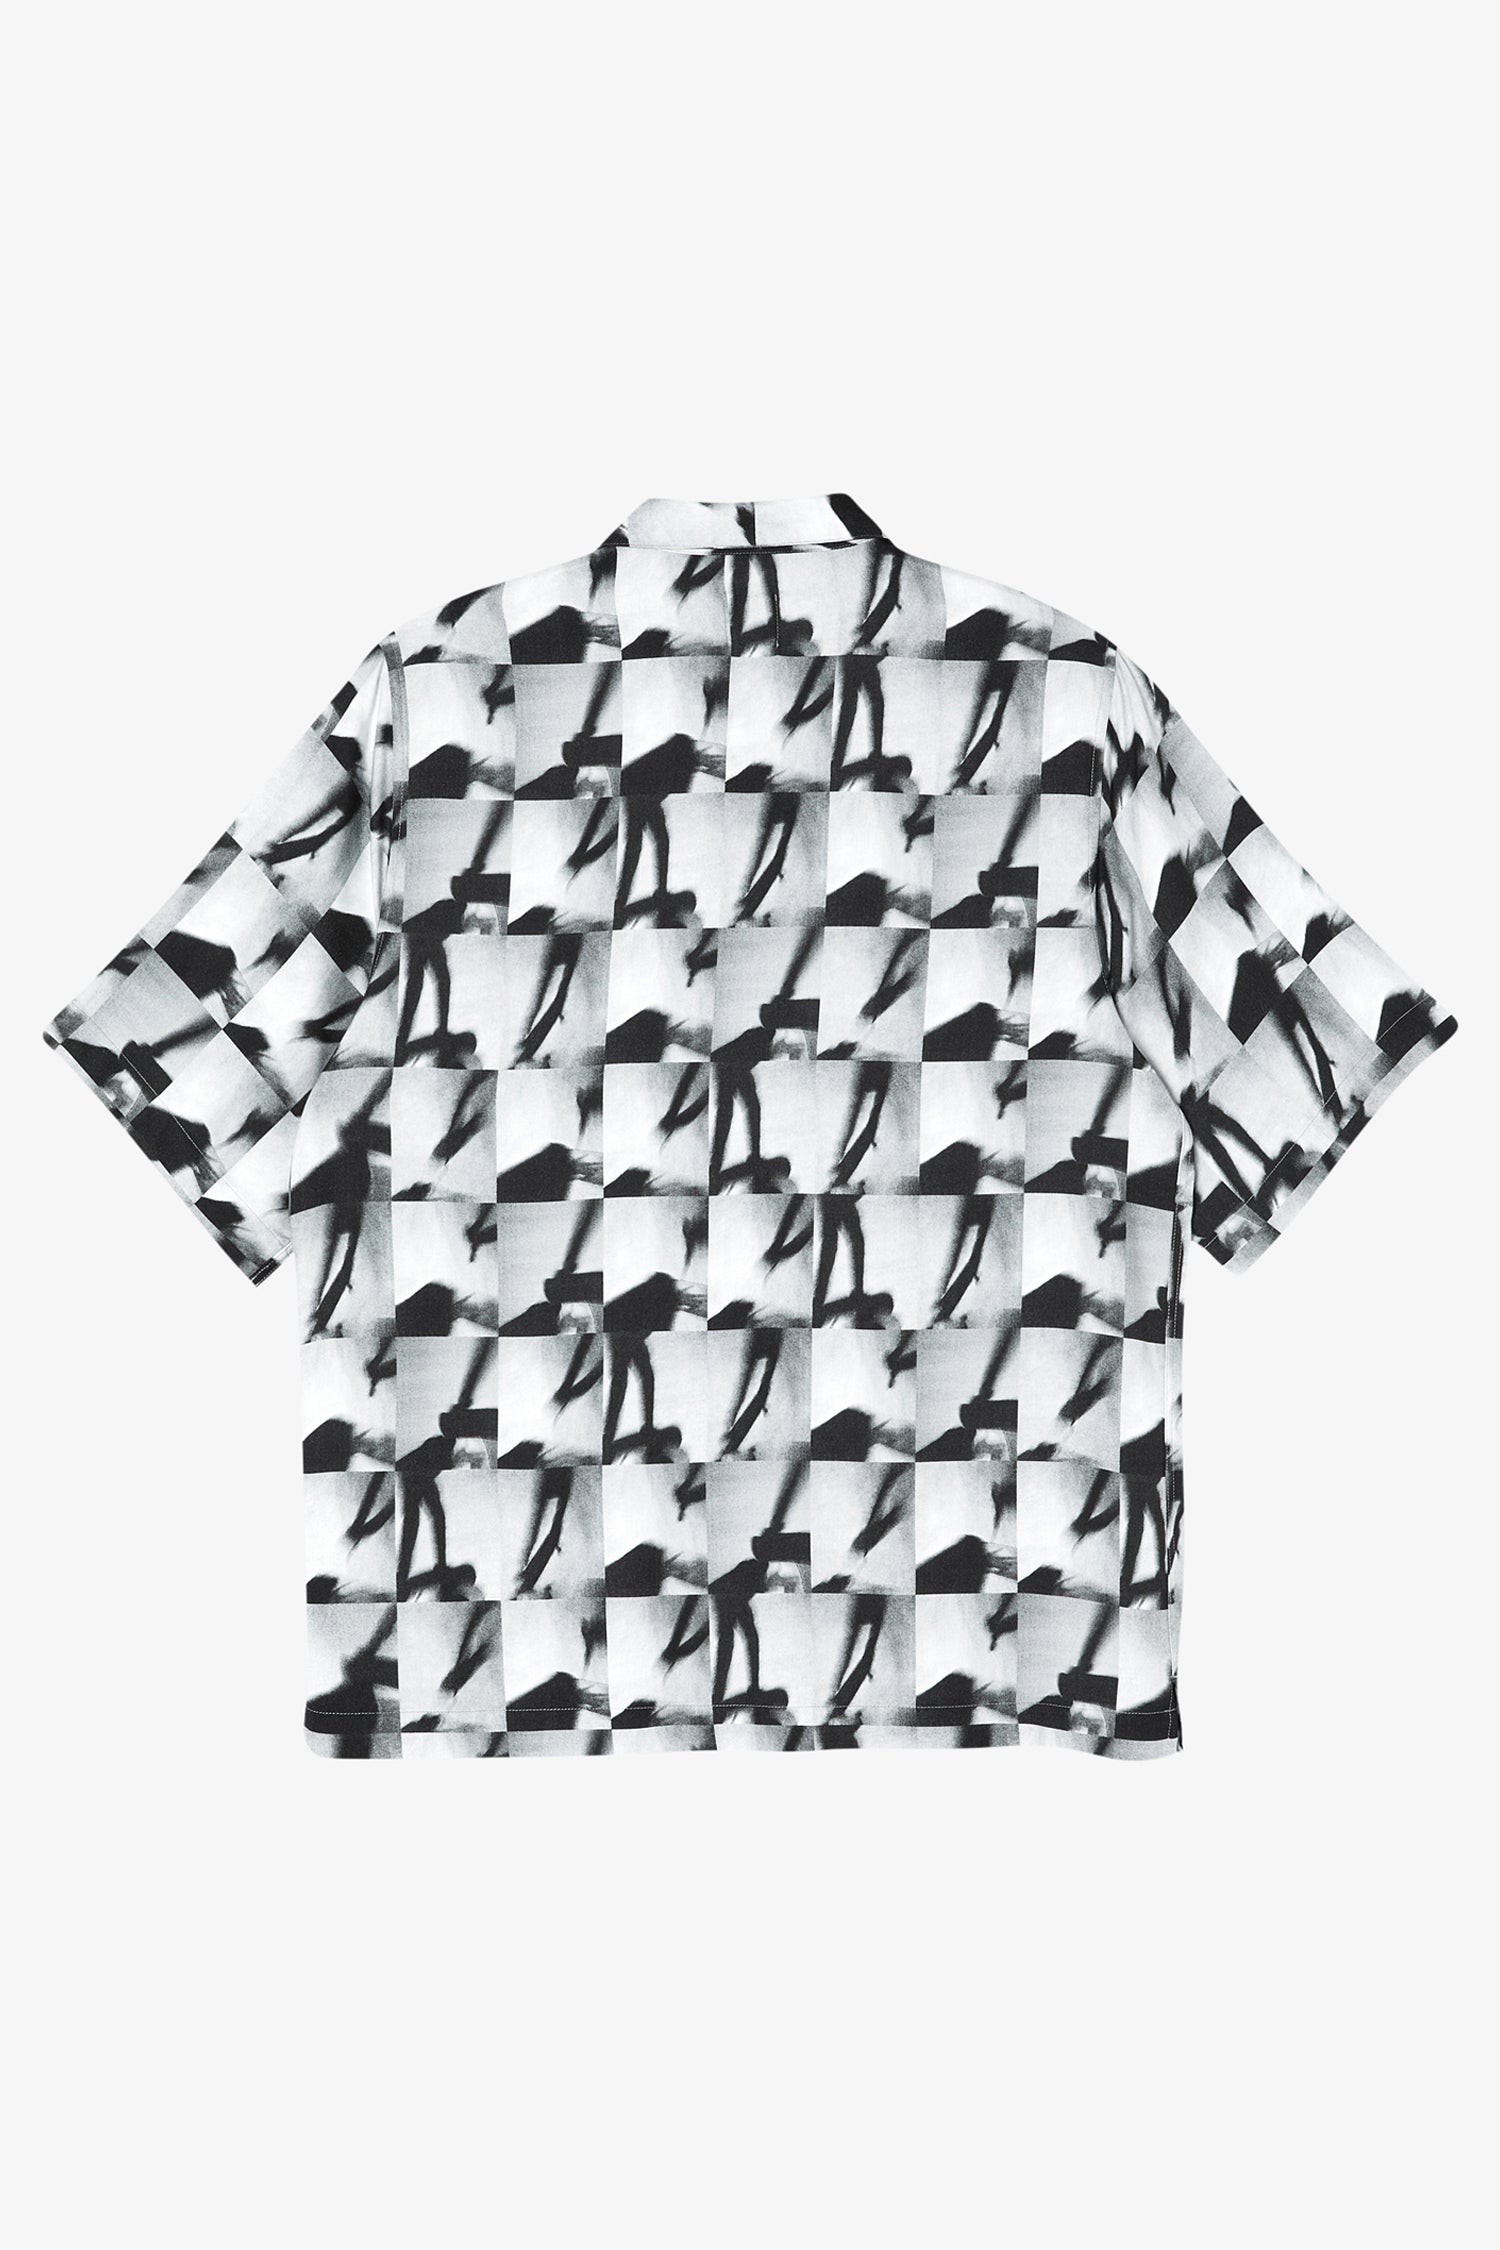 Selectshop FRAME - POLAR SKATE CO. Sequence Art Shirt Shirts Dubai